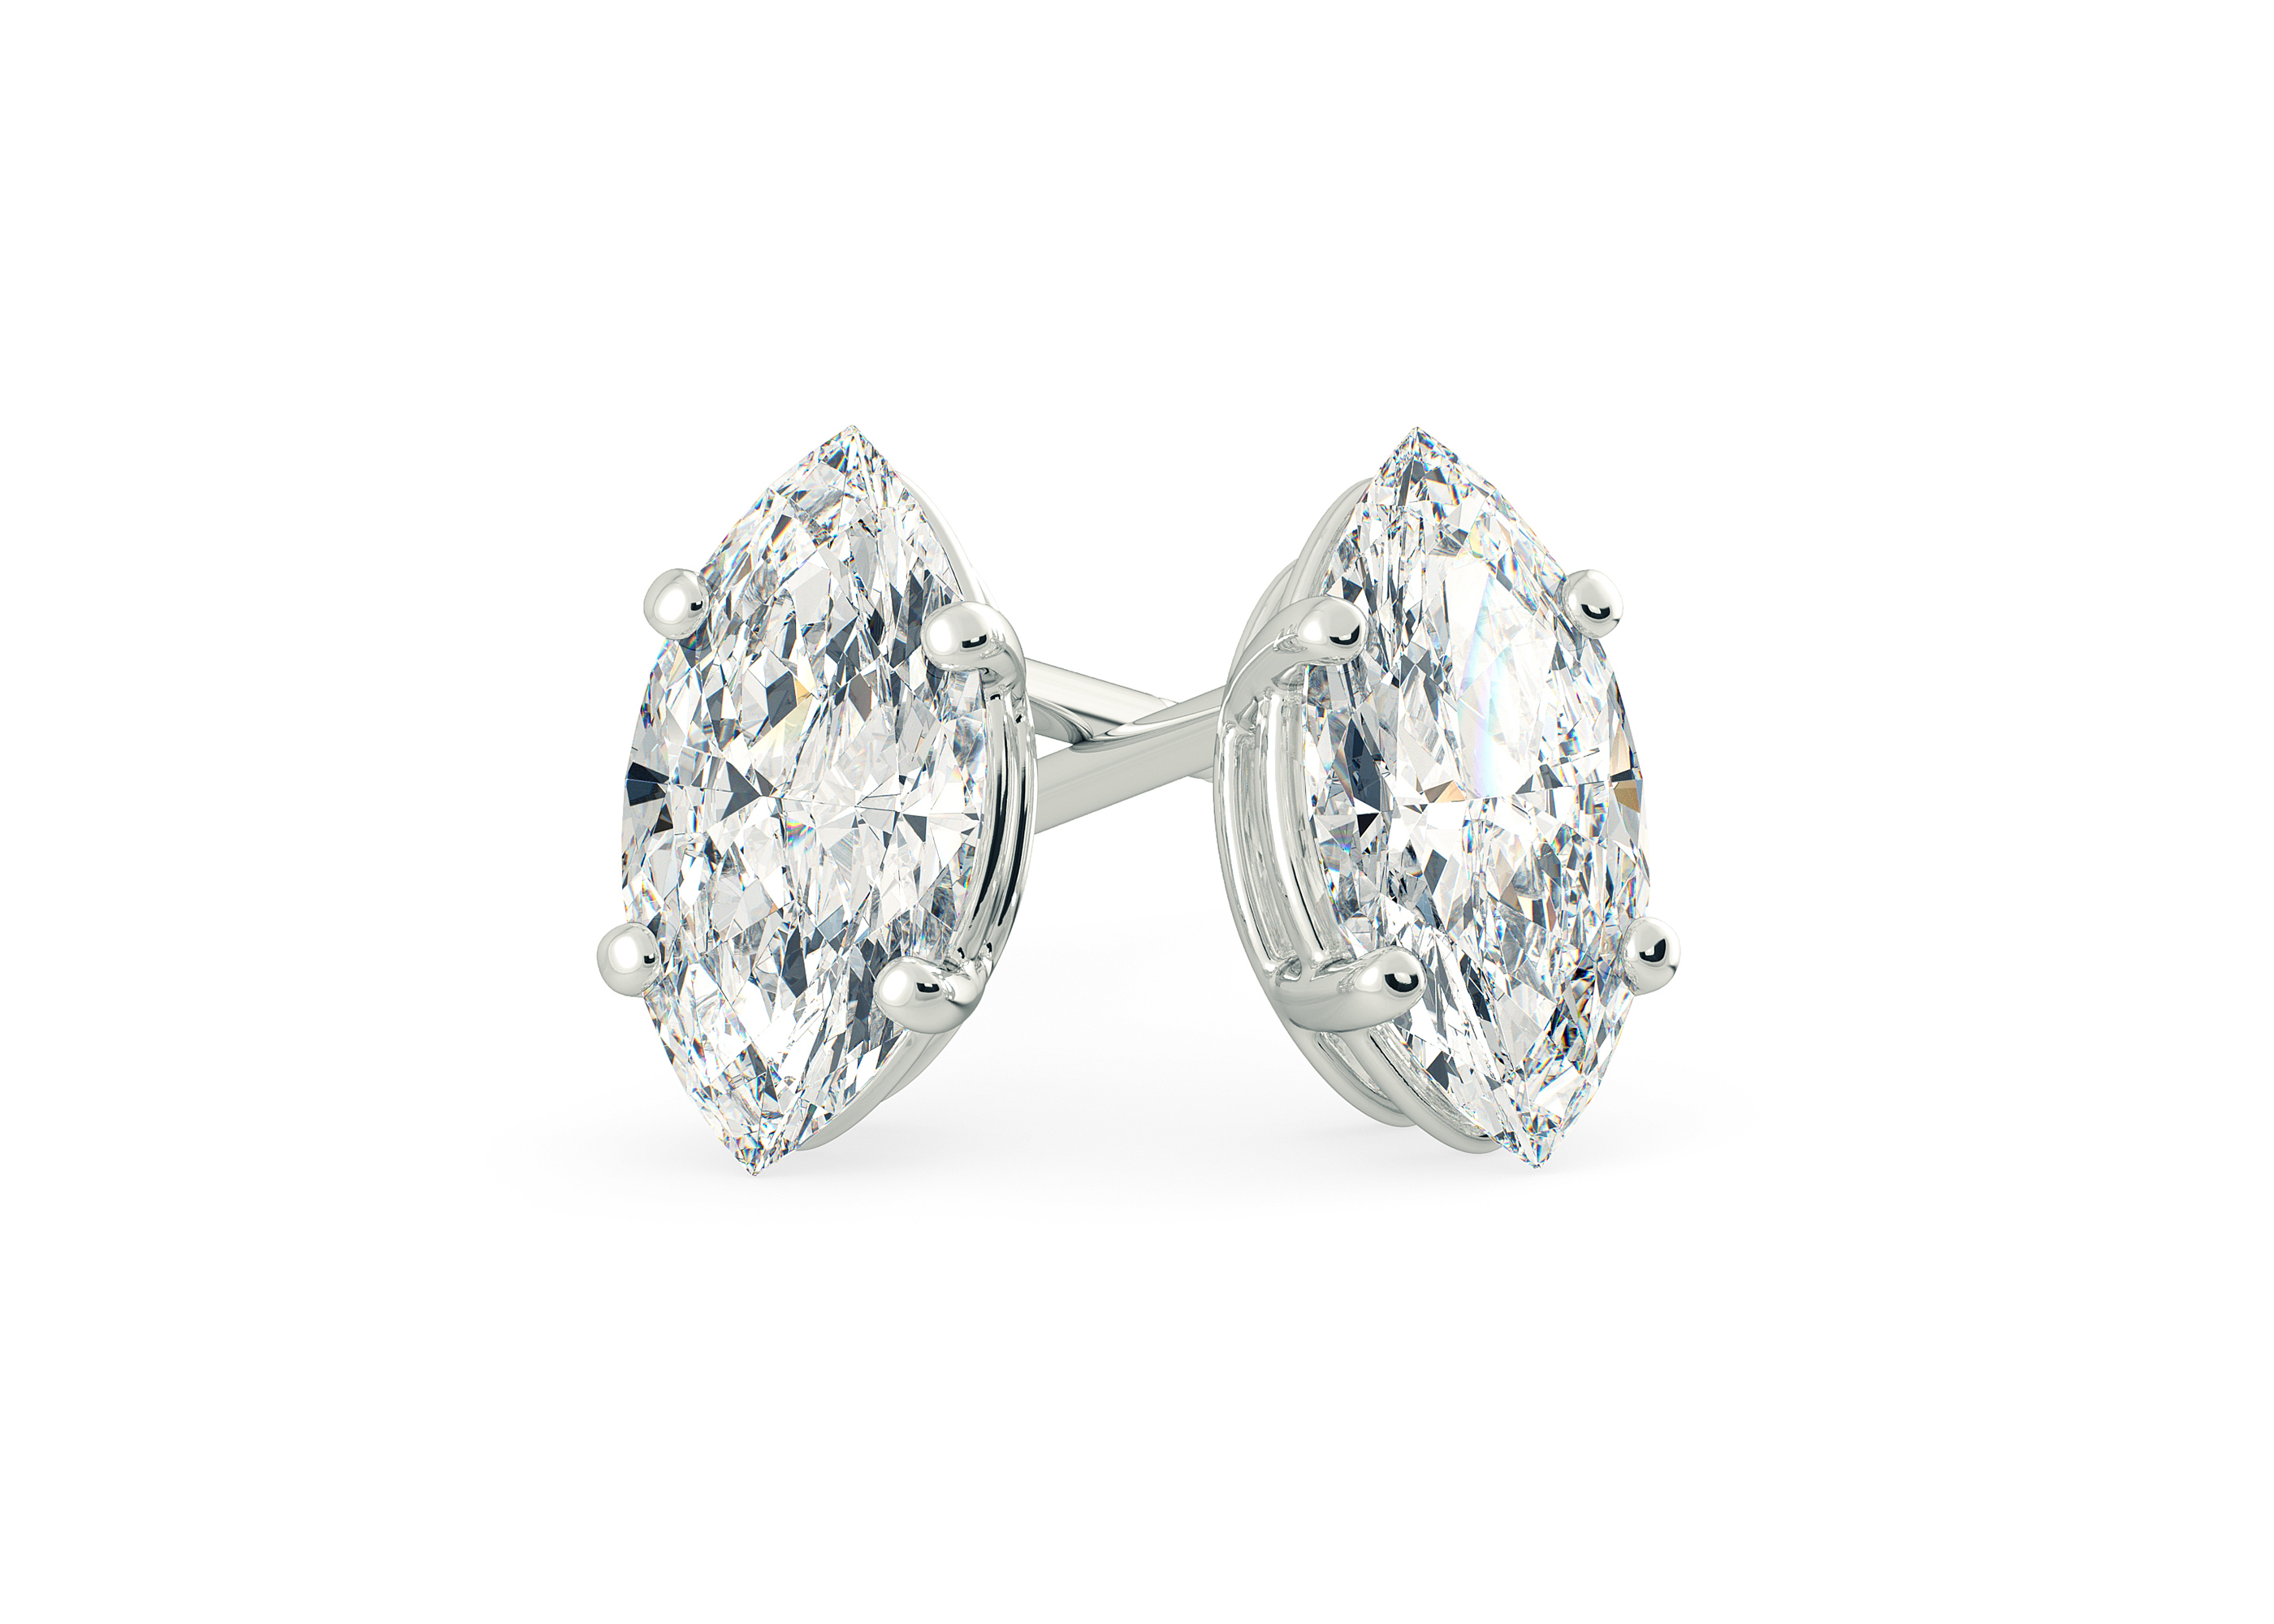 Two Carat Marquise Diamond Stud Earrings in Platinum 950